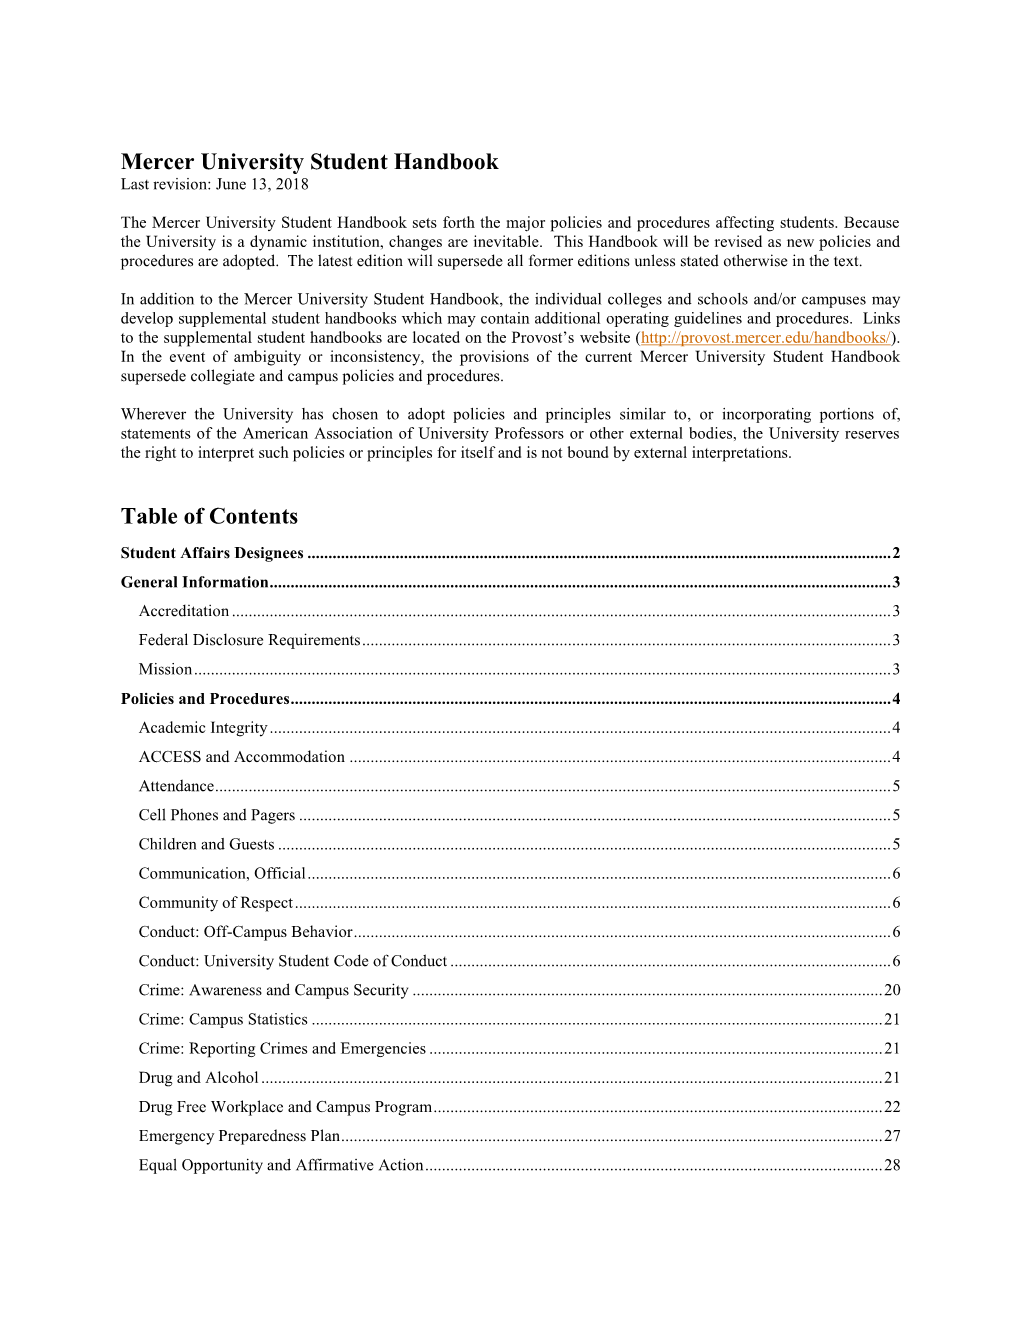 Mercer University Student Handbook Table of Contents